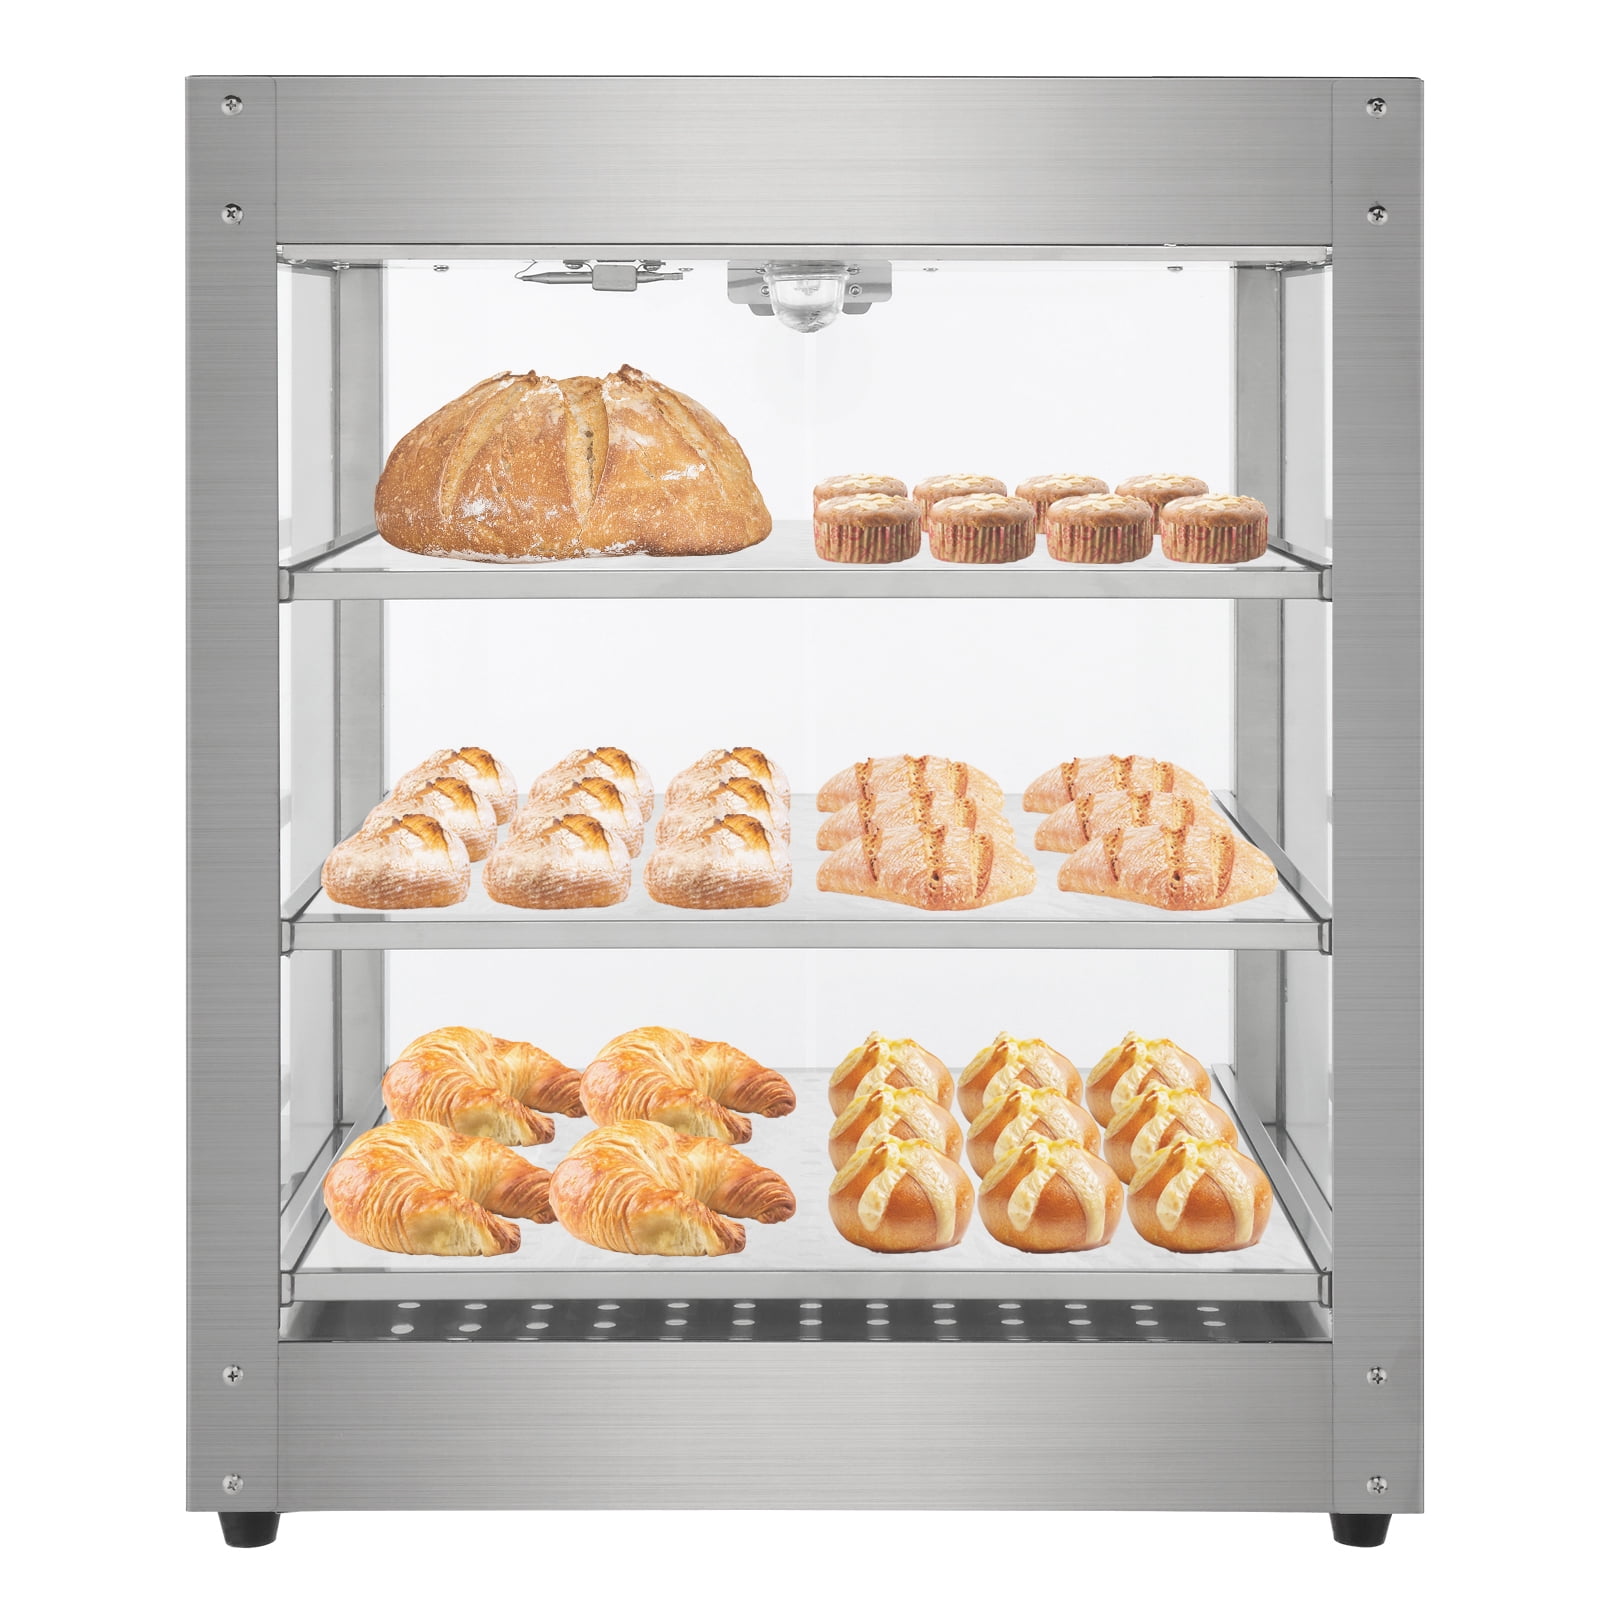 SY-WD24J, countertop sandwich warmer display